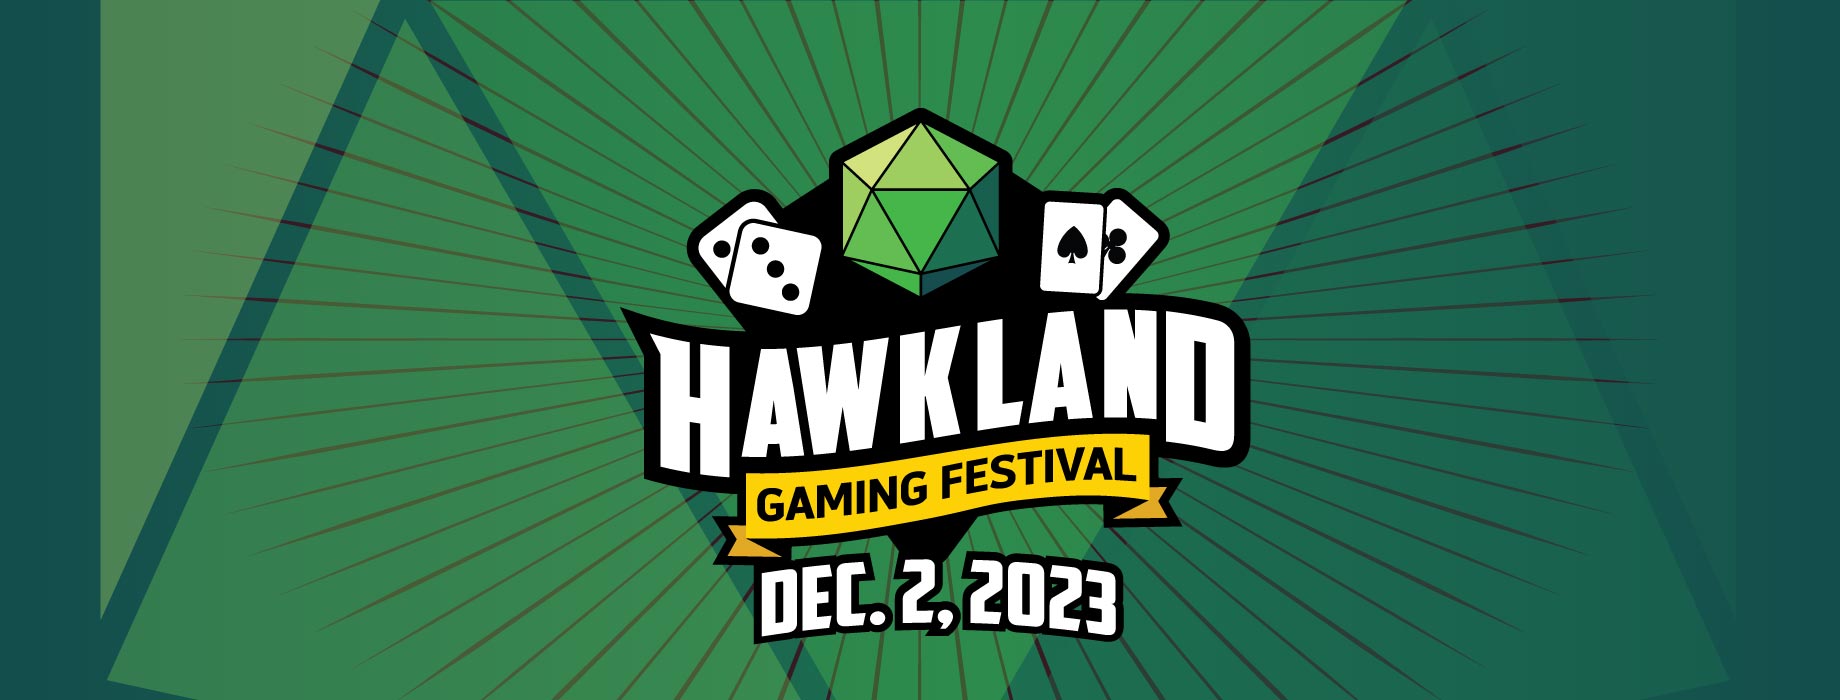 Hawkland Gaming Festival 2023